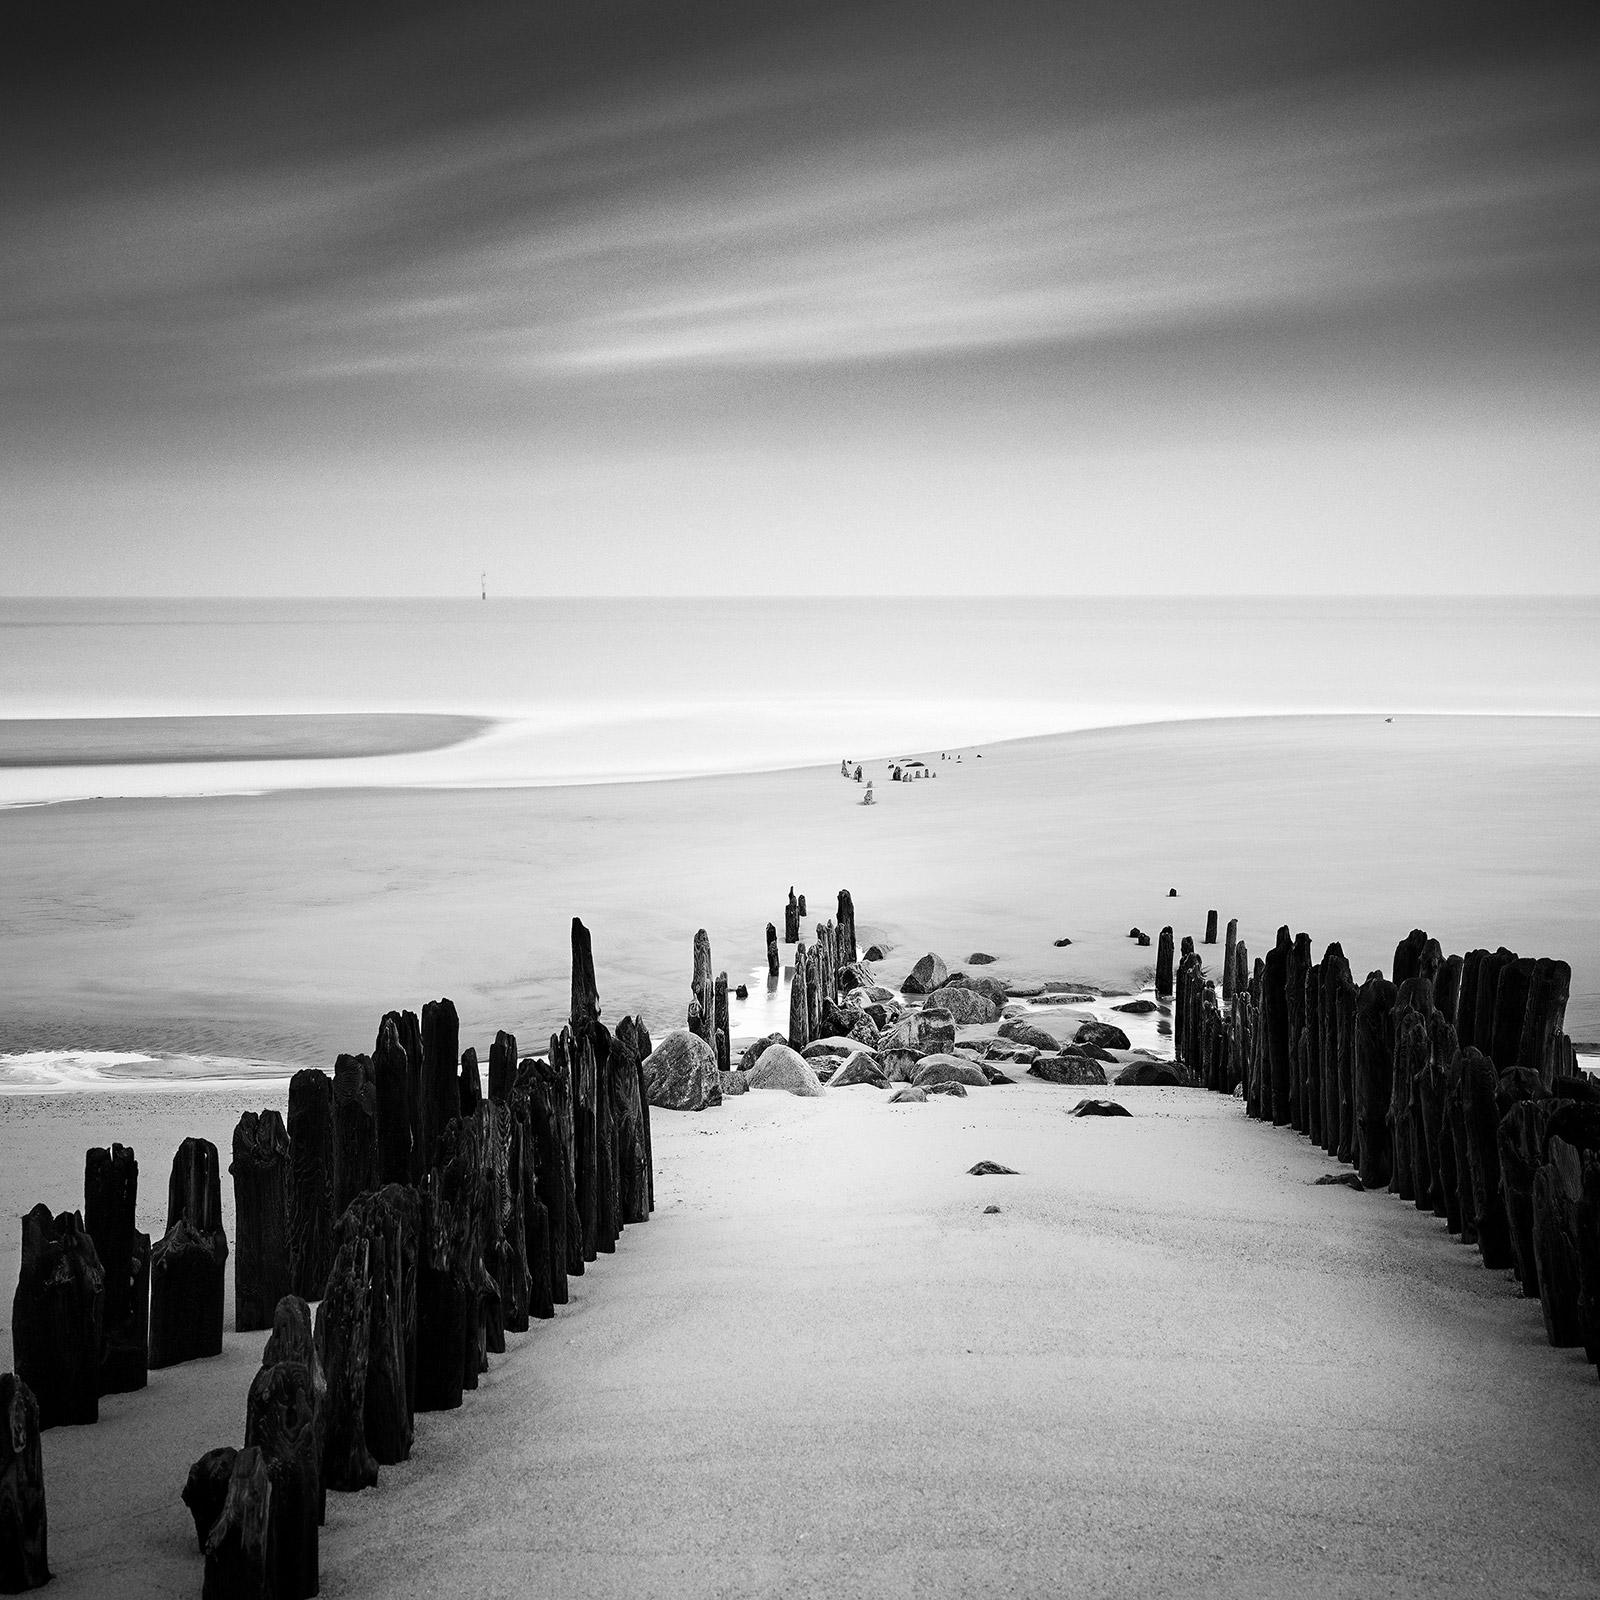 Gerald Berghammer Landscape Photograph - Groyne, Wavebreaker, Beach, Sylt, Germany, black & white waterscape photo print